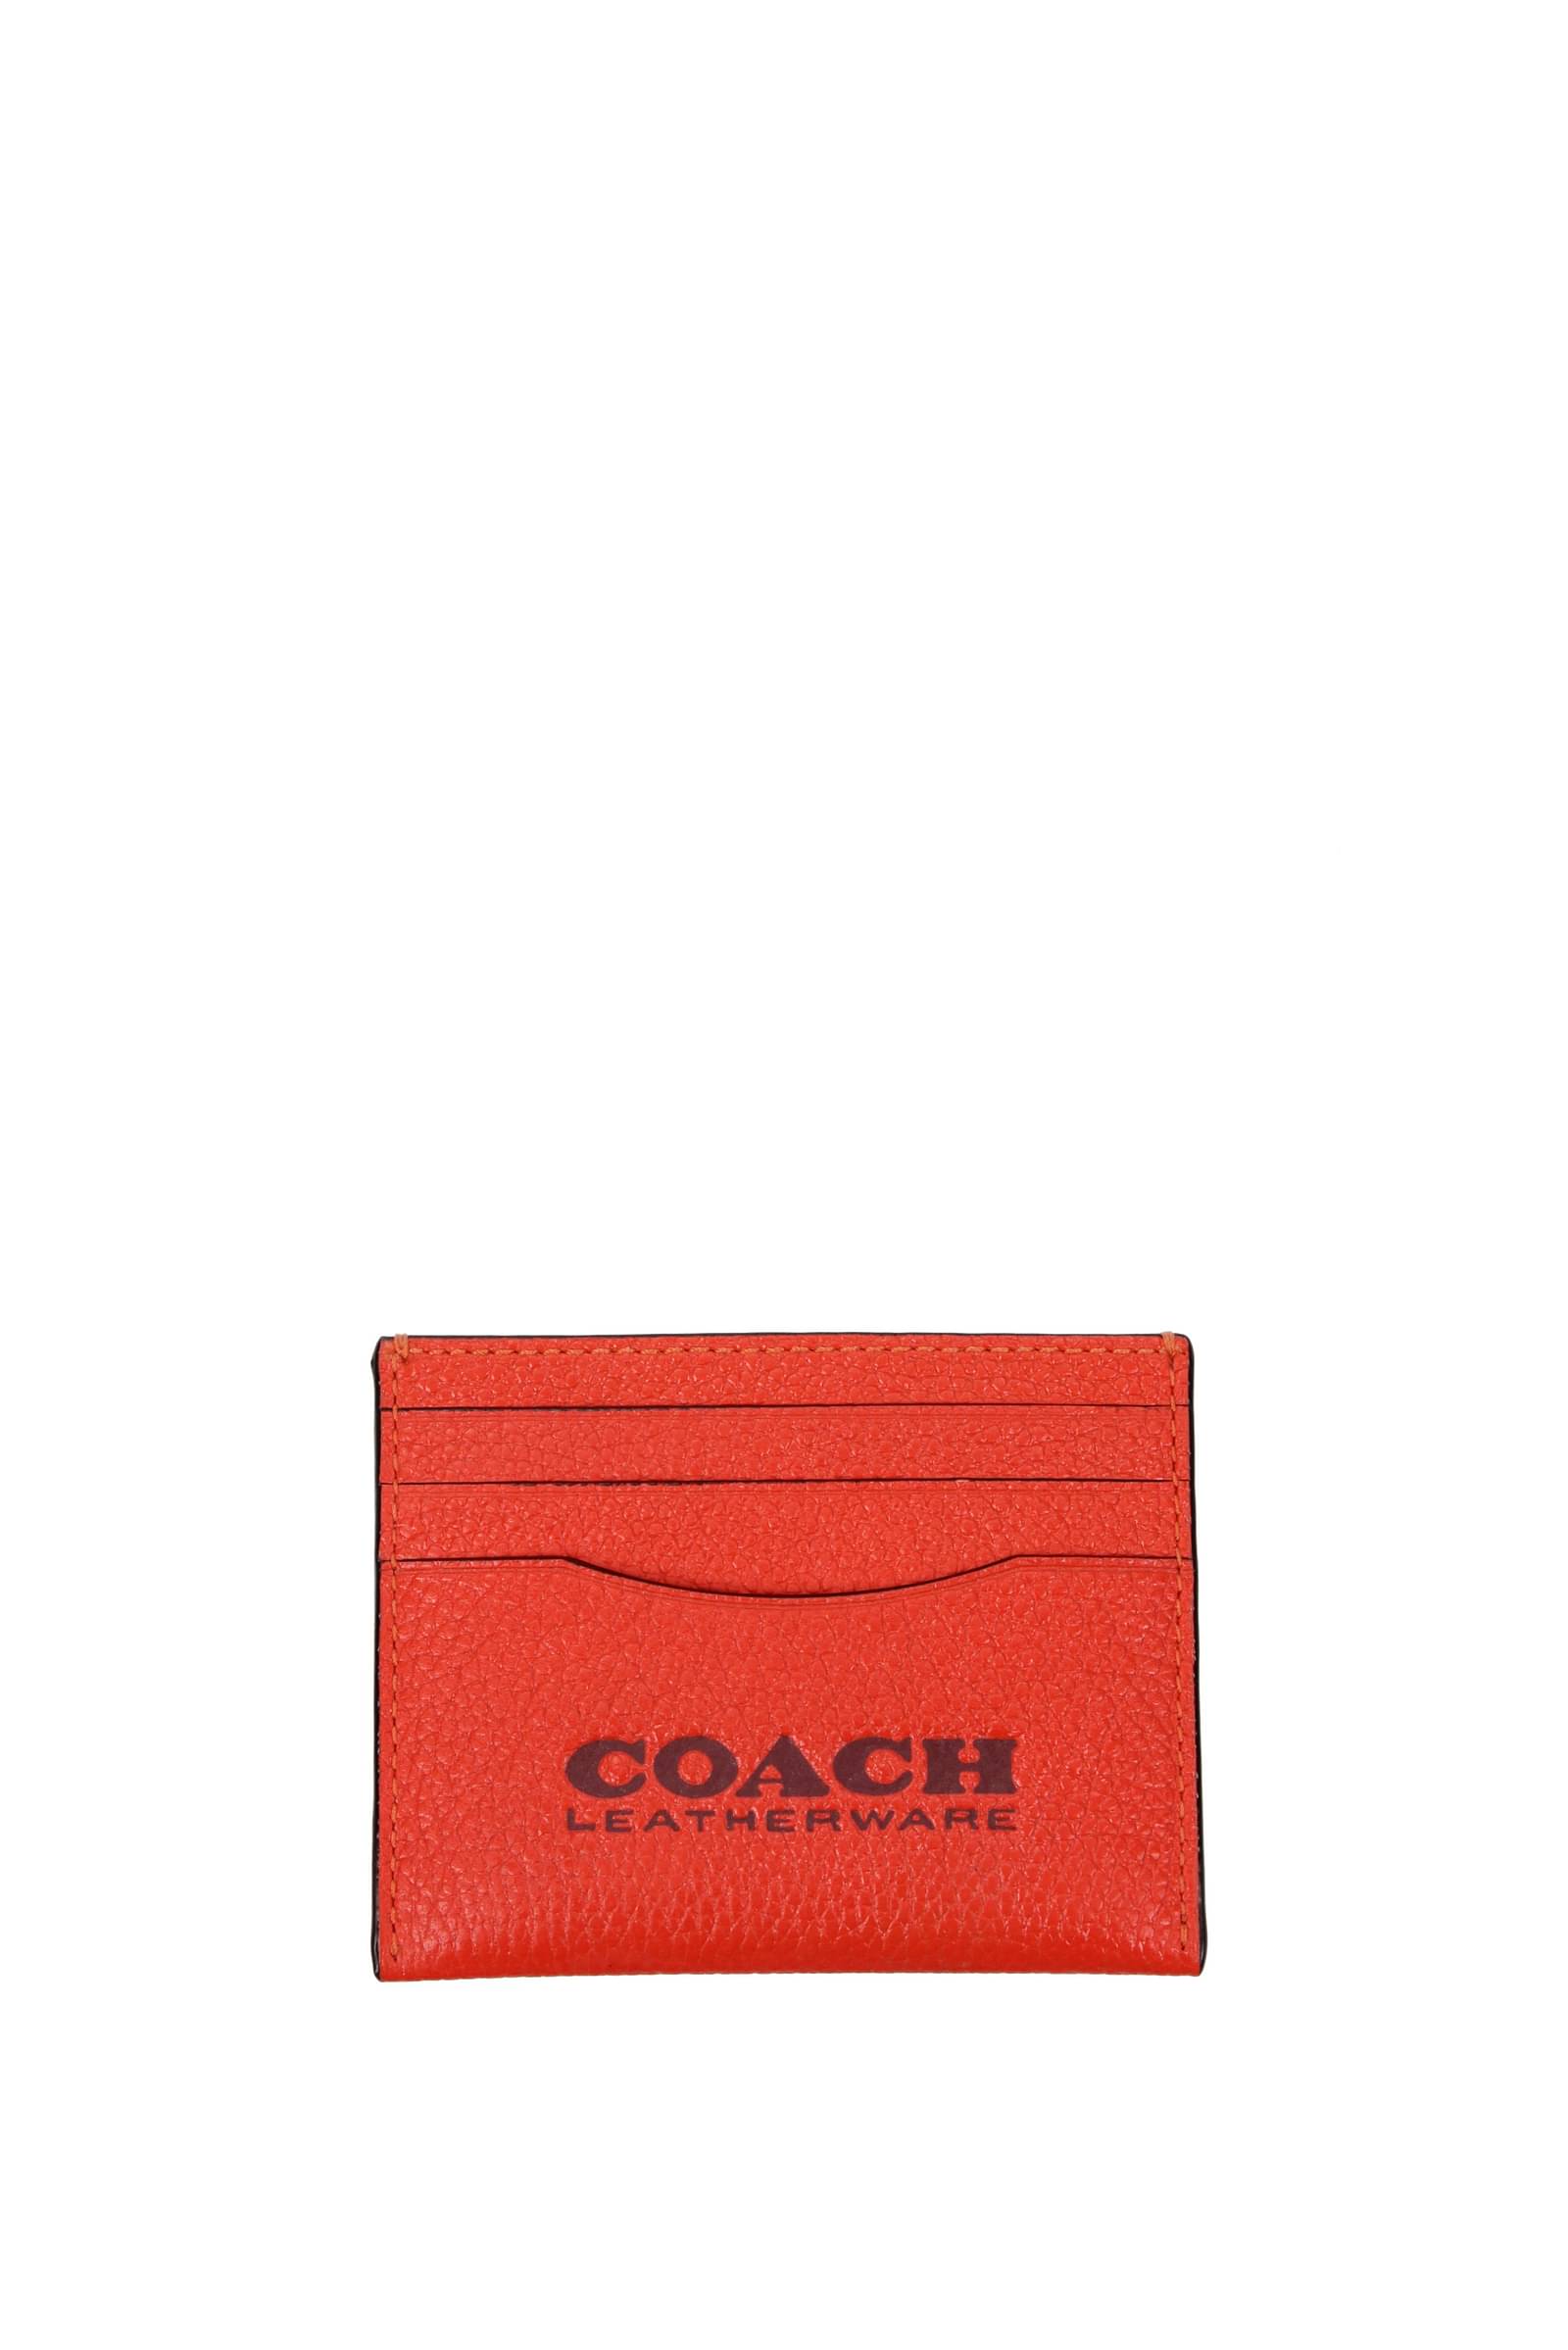 Coach Australia Sale | Discount bags, perfume + more! | Catch.com.au